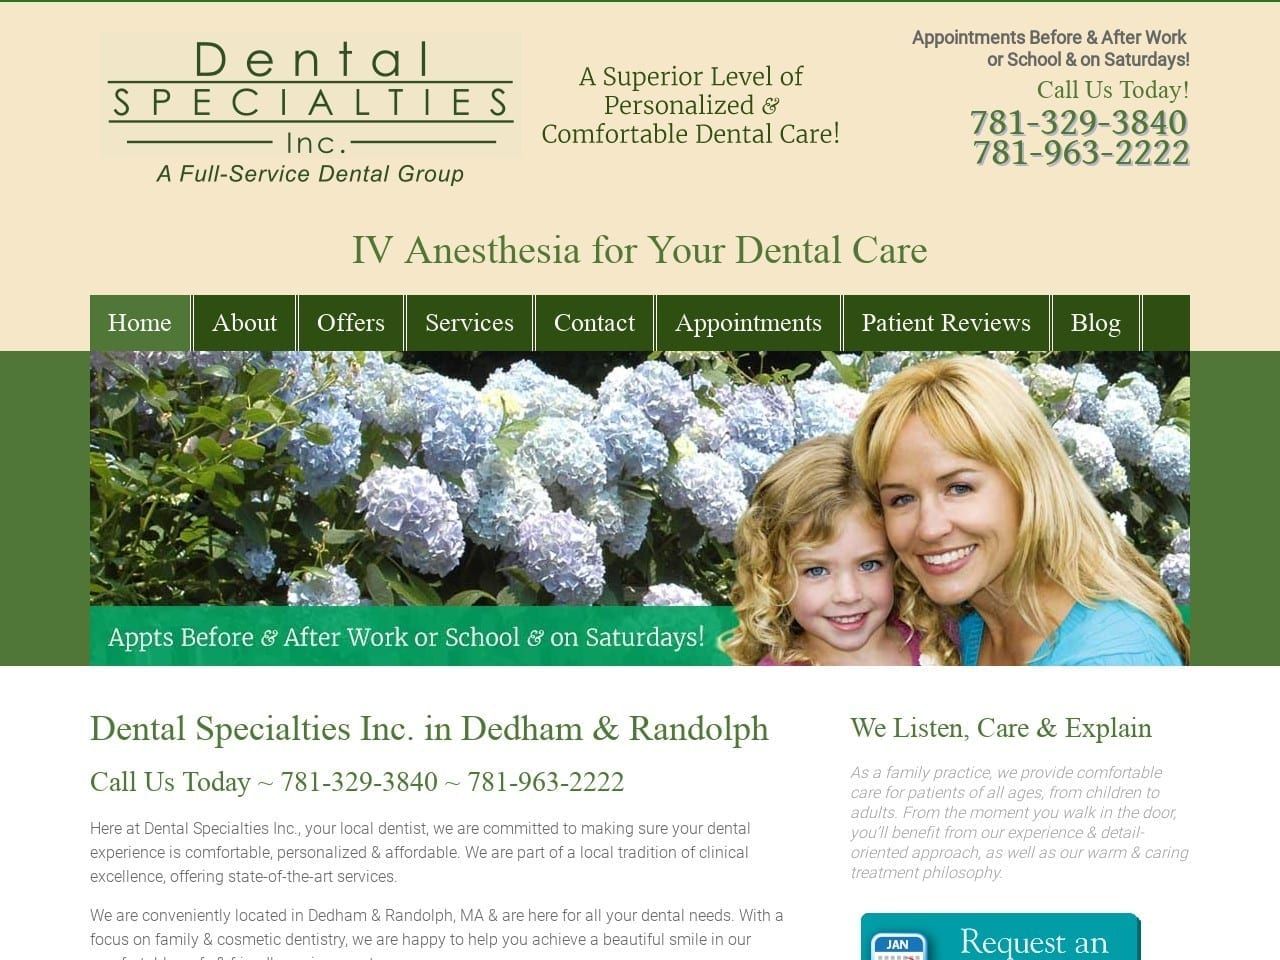 Dental Specialties Website Screenshot from dentalspecialties.com